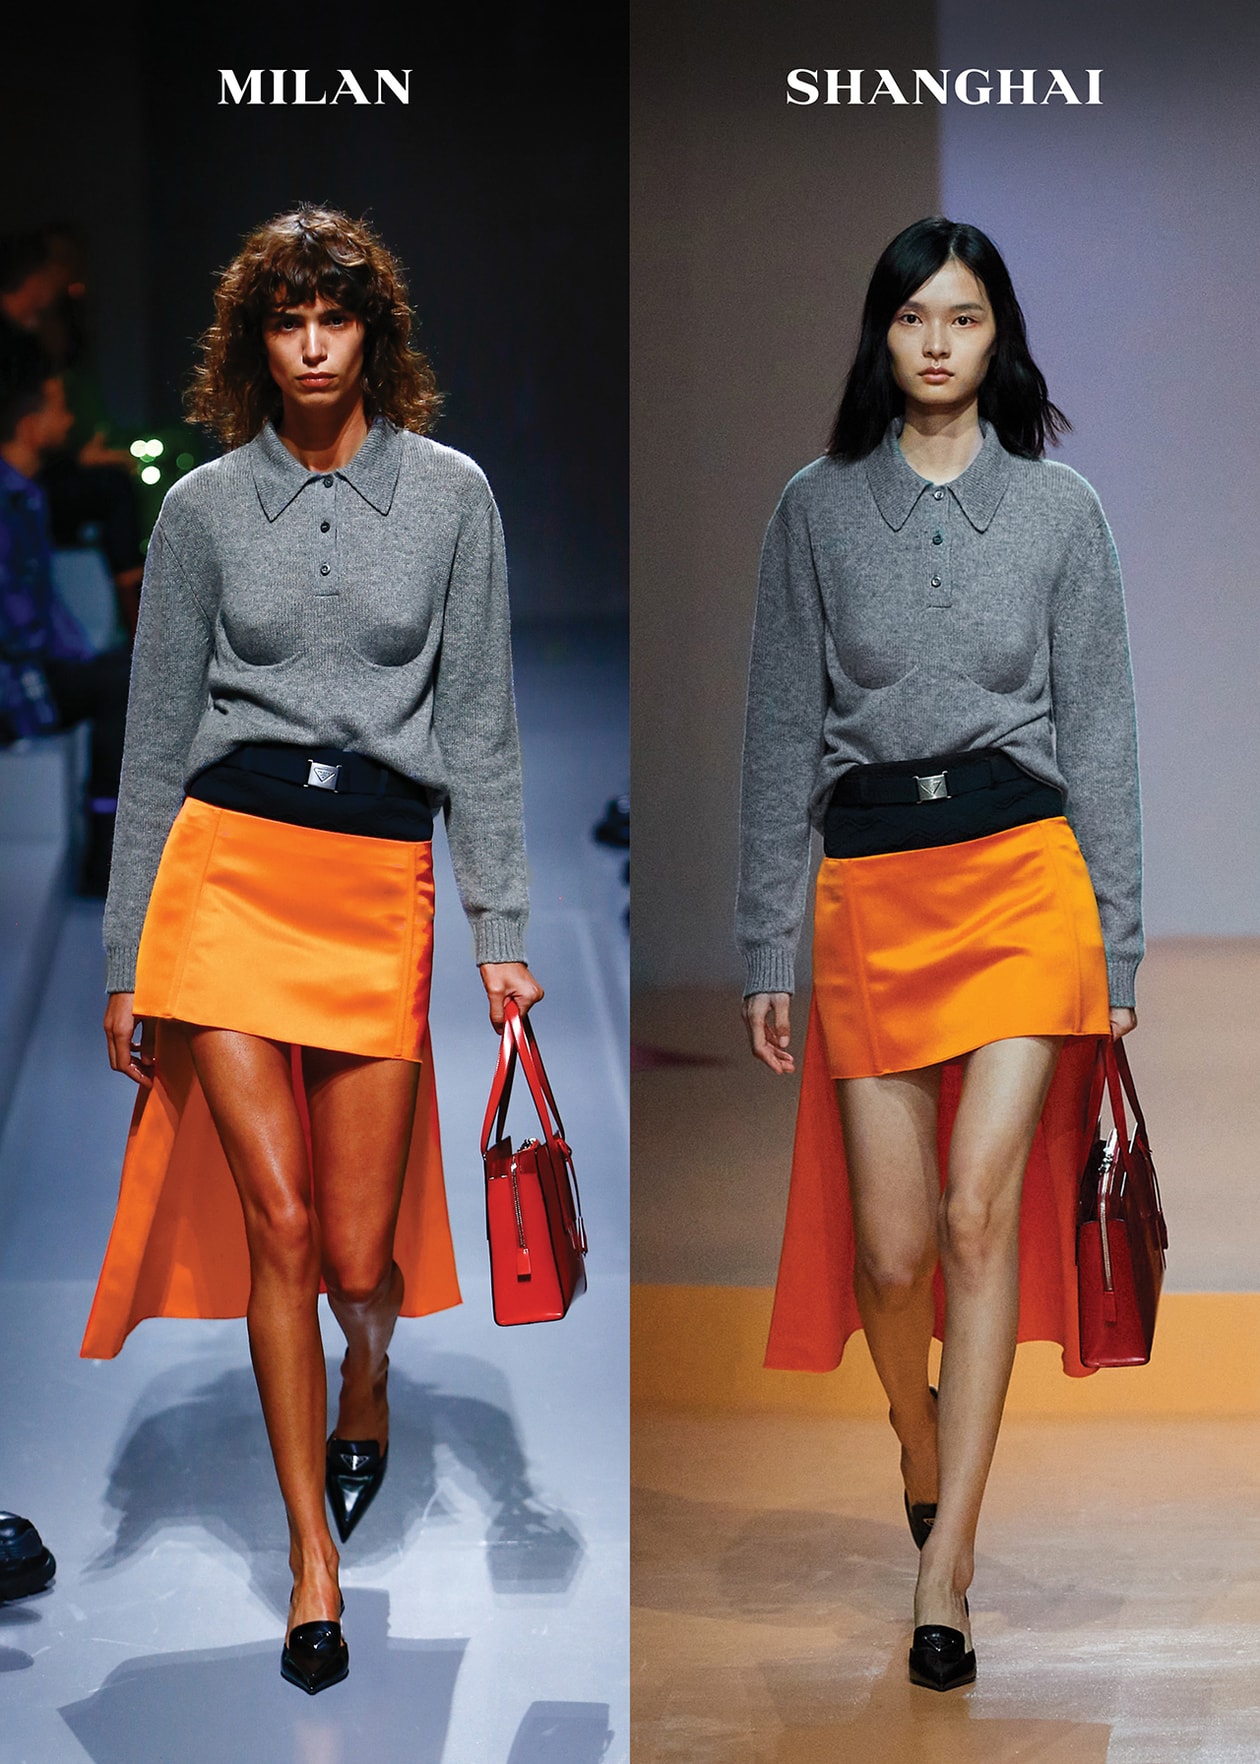 Milan Fashion Week Spring Summer 2022 SS22 Top Shows Trends Jil Sander Prada Versace Fendi Gigi Hadid He Cong